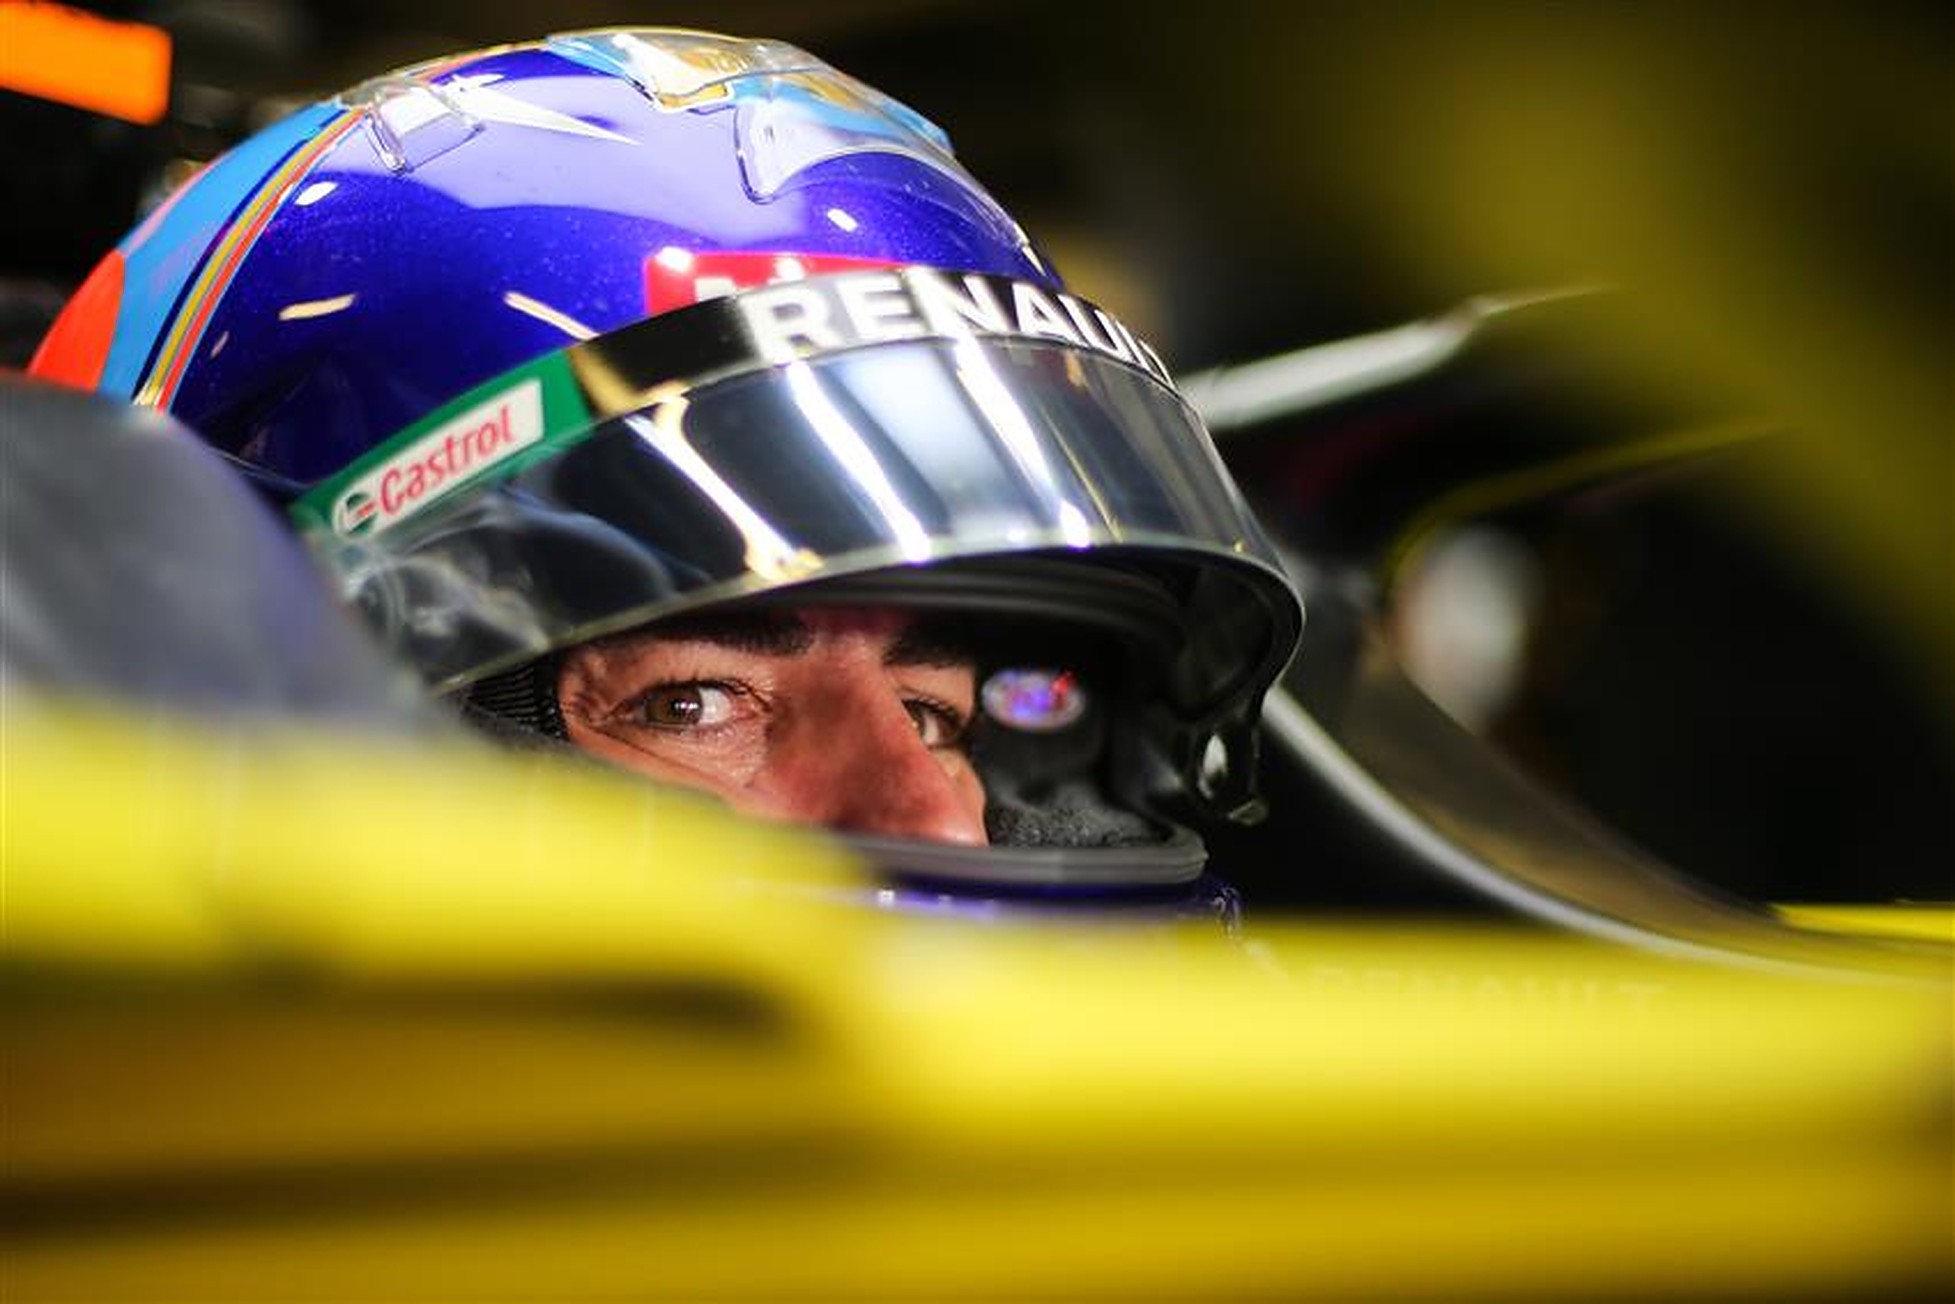 Fernando Alonso F1 return after cycling crash - Formula1News.co.uk